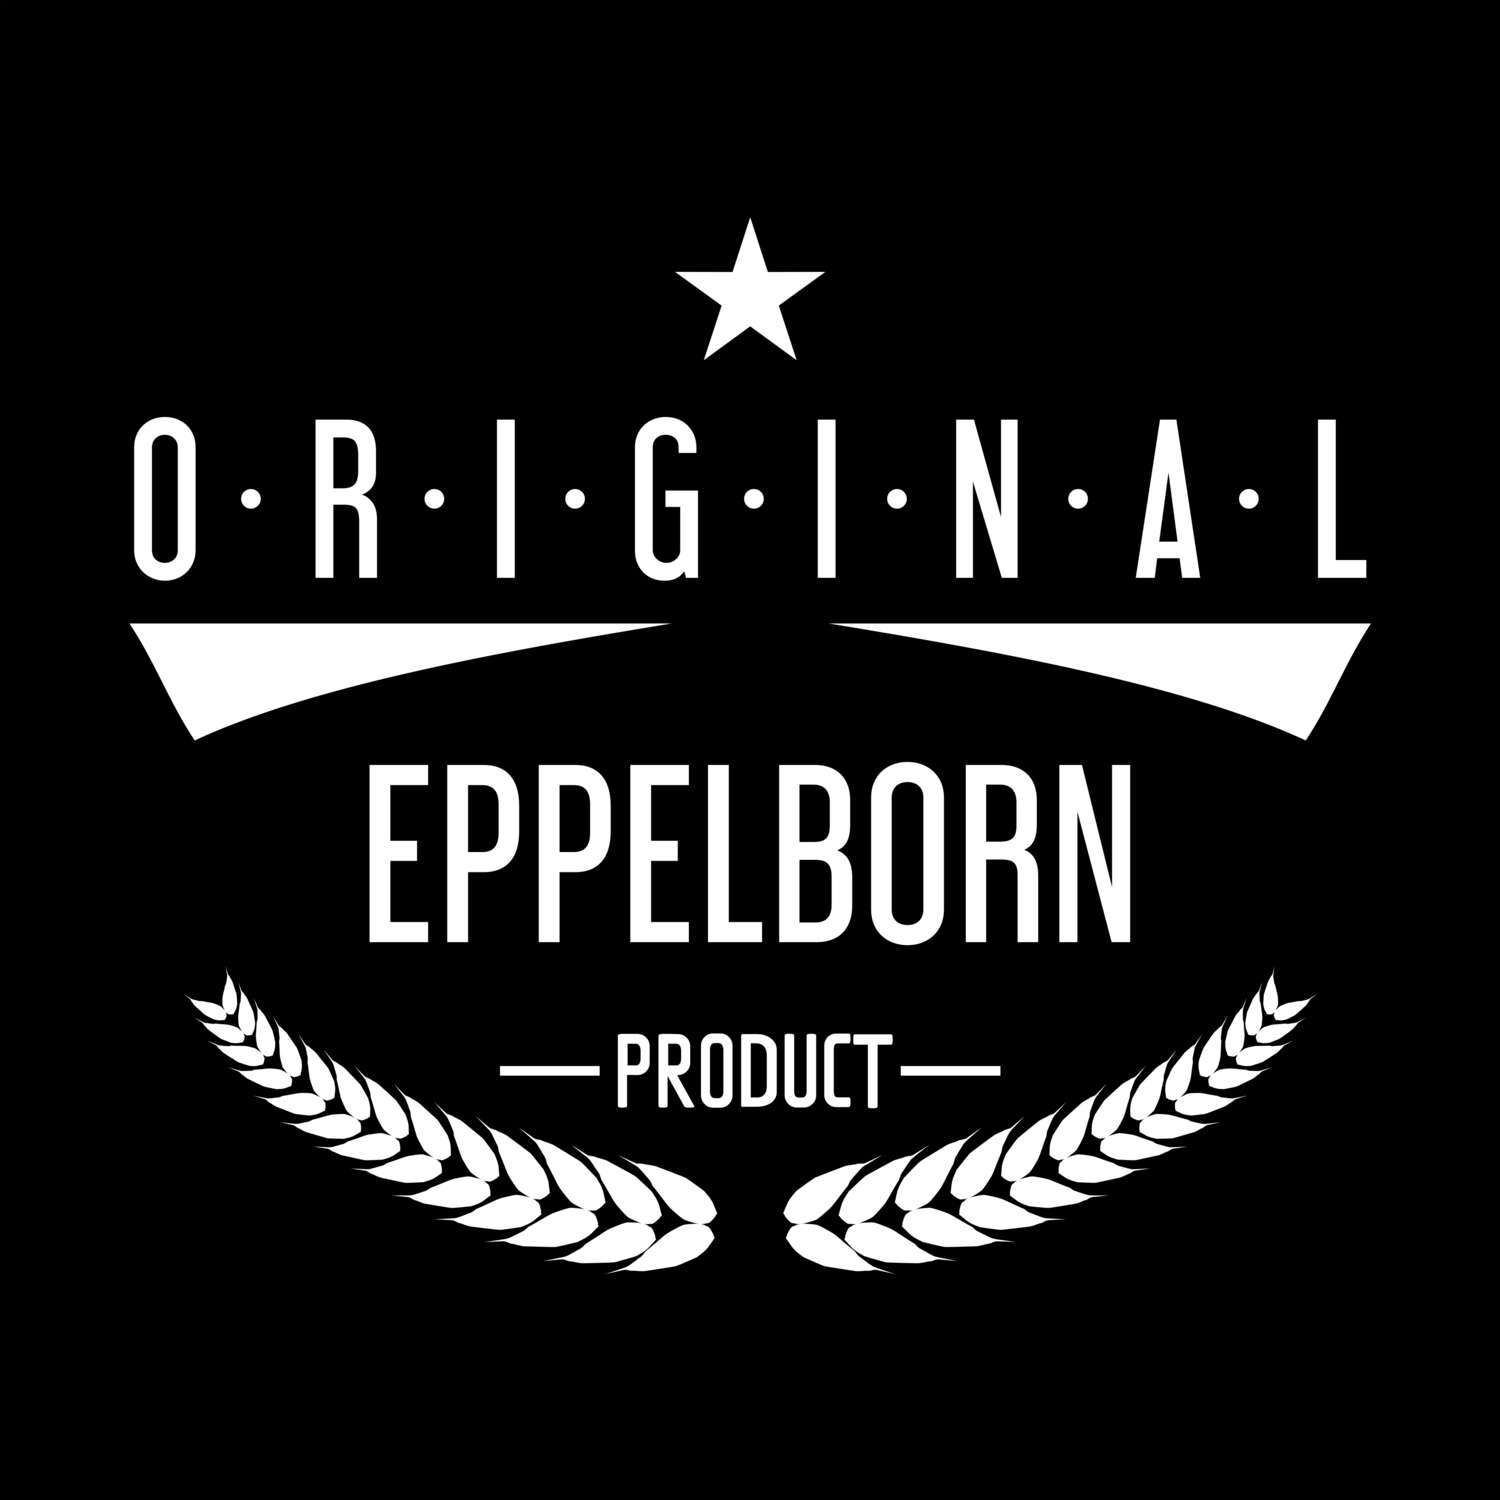 Eppelborn T-Shirt »Original Product«